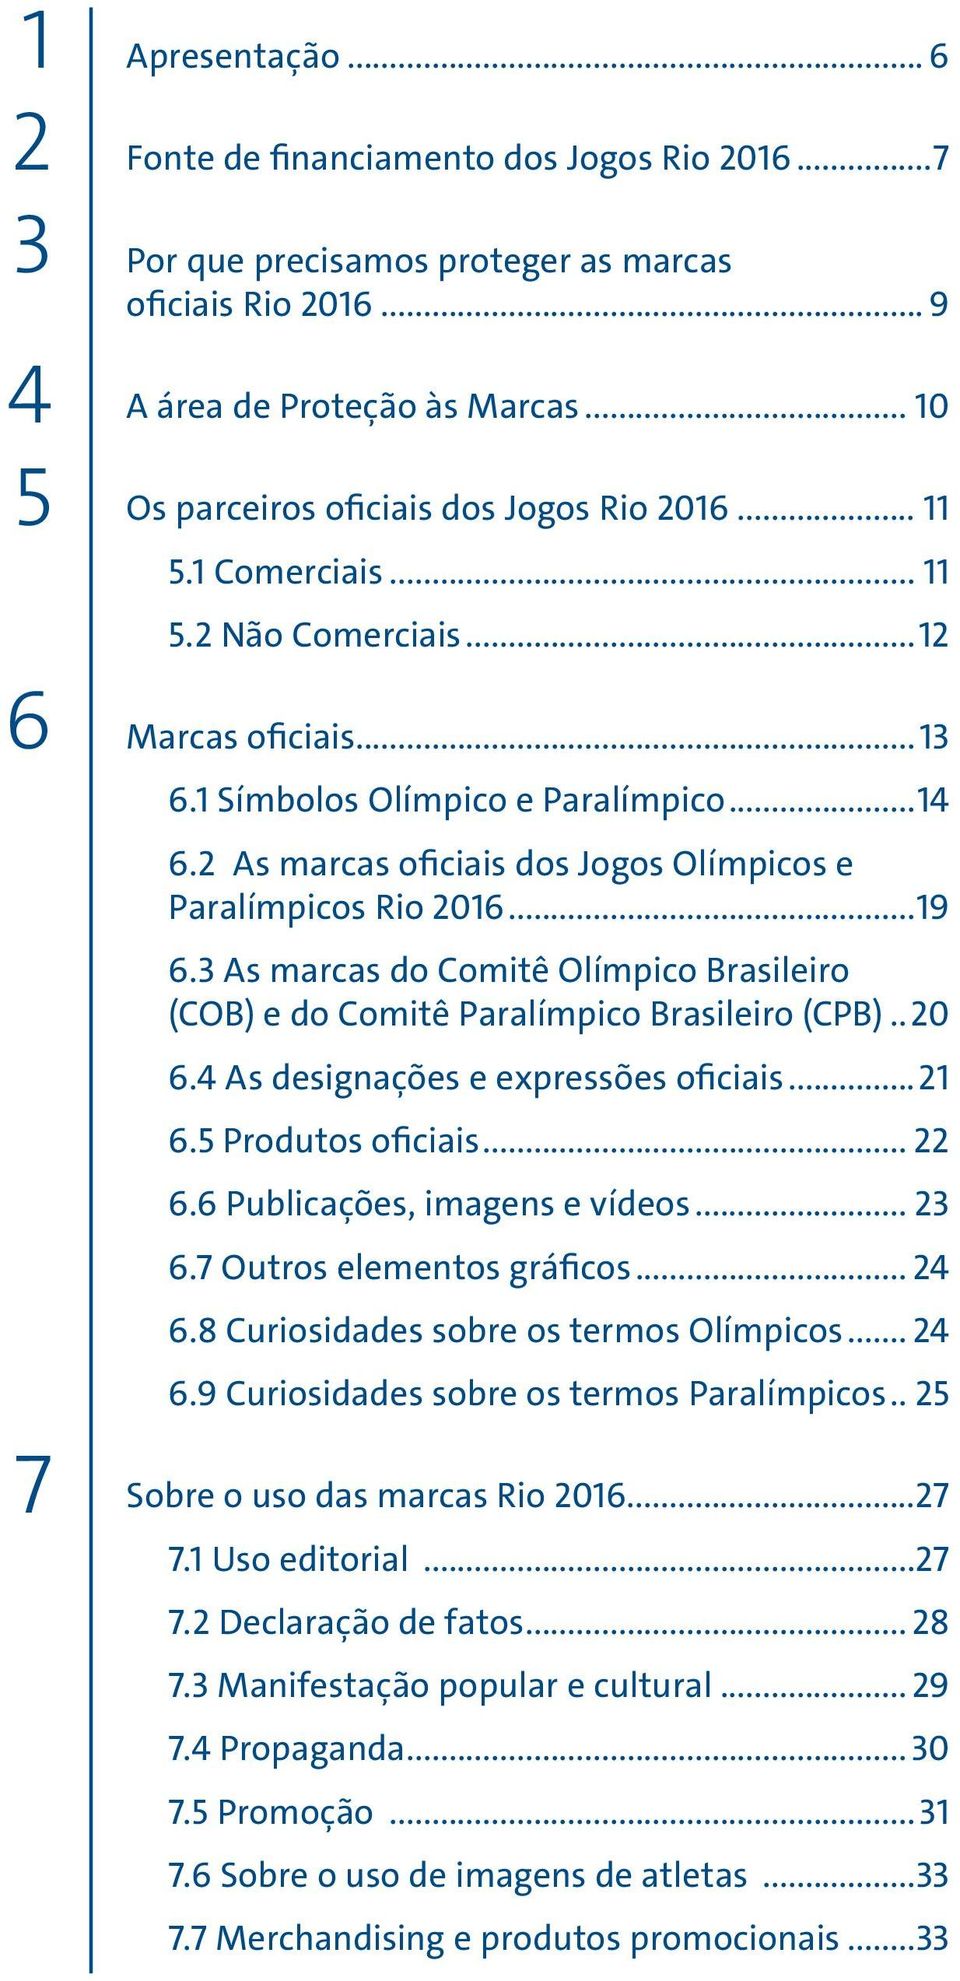 2 As marcas oficiais dos Jogos Olímpicos e Paralímpicos Rio 2016...19 6.3 As marcas do Comitê Olímpico Brasileiro (COB) e do Comitê Paralímpico Brasileiro (CPB)...20 6.